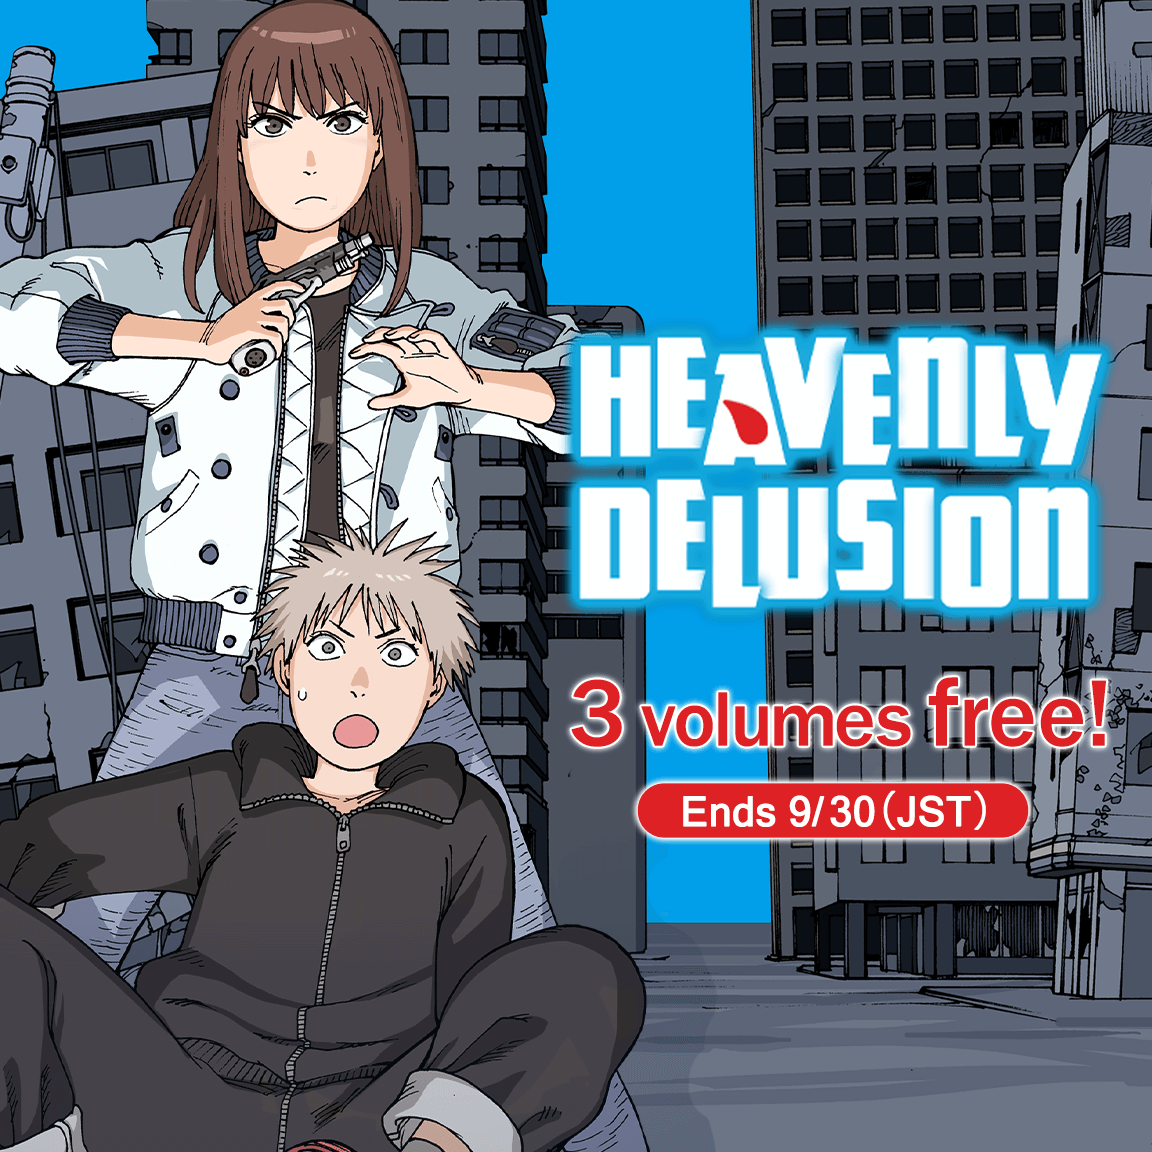 Heavenly Delusion Manga